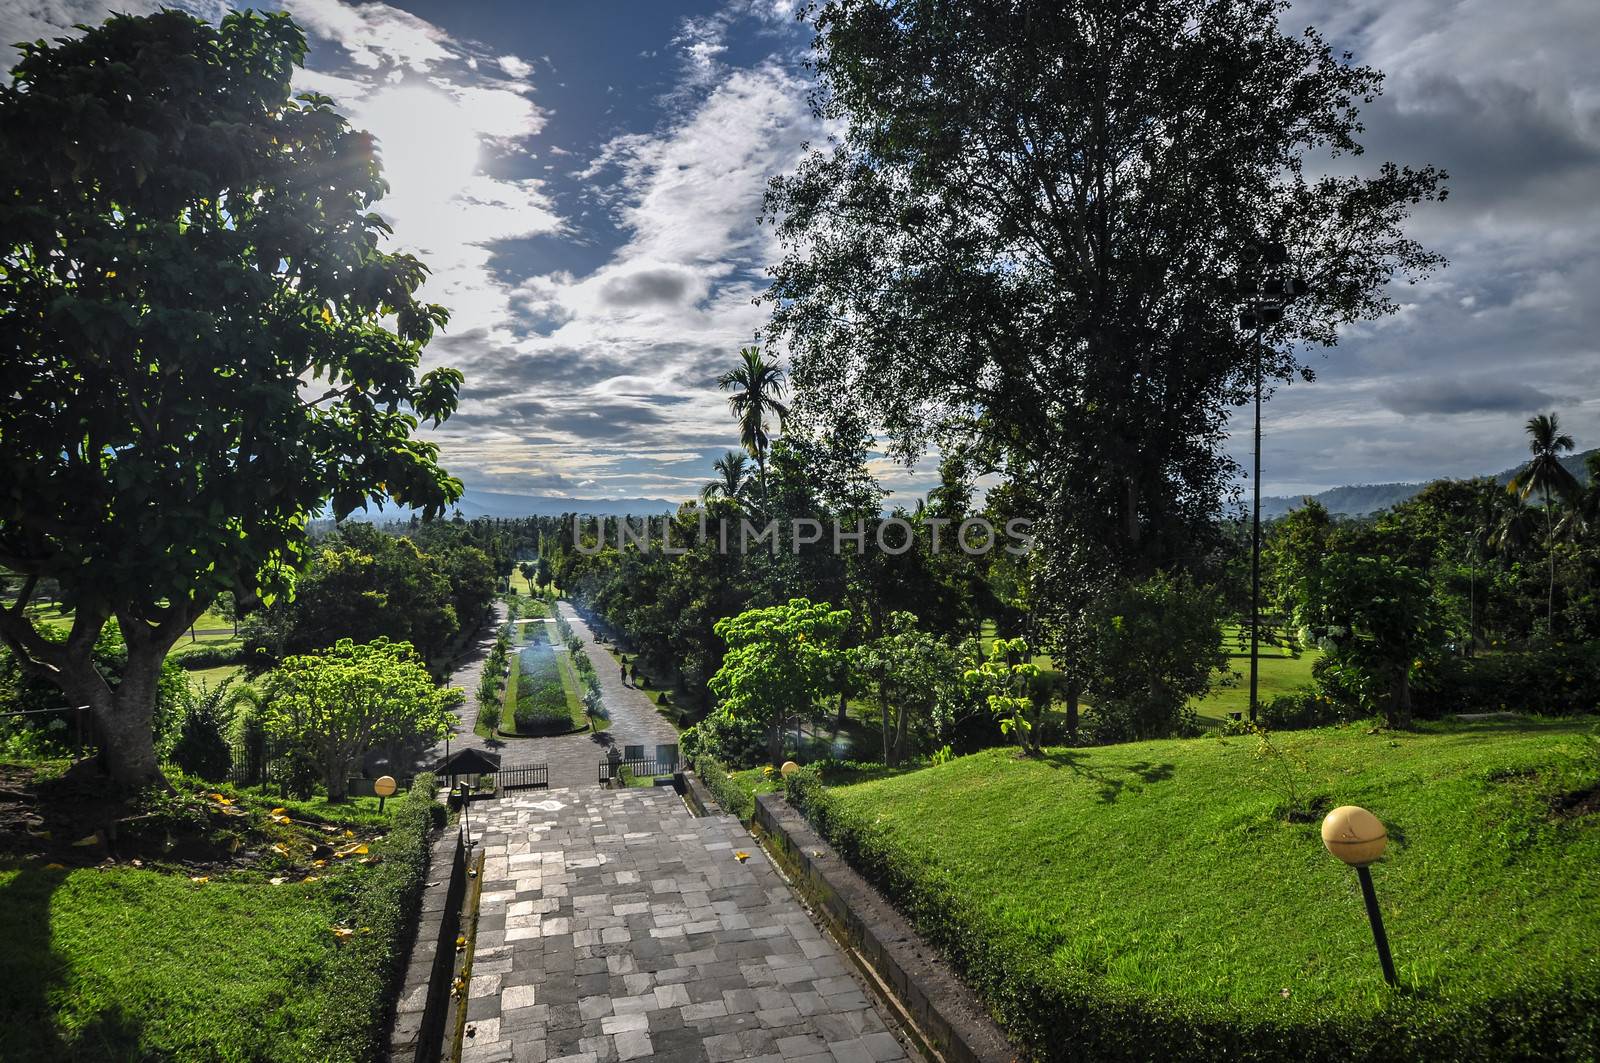 Buddist temple Borobudur Park complex in Yogjakarta in Java by weltreisendertj